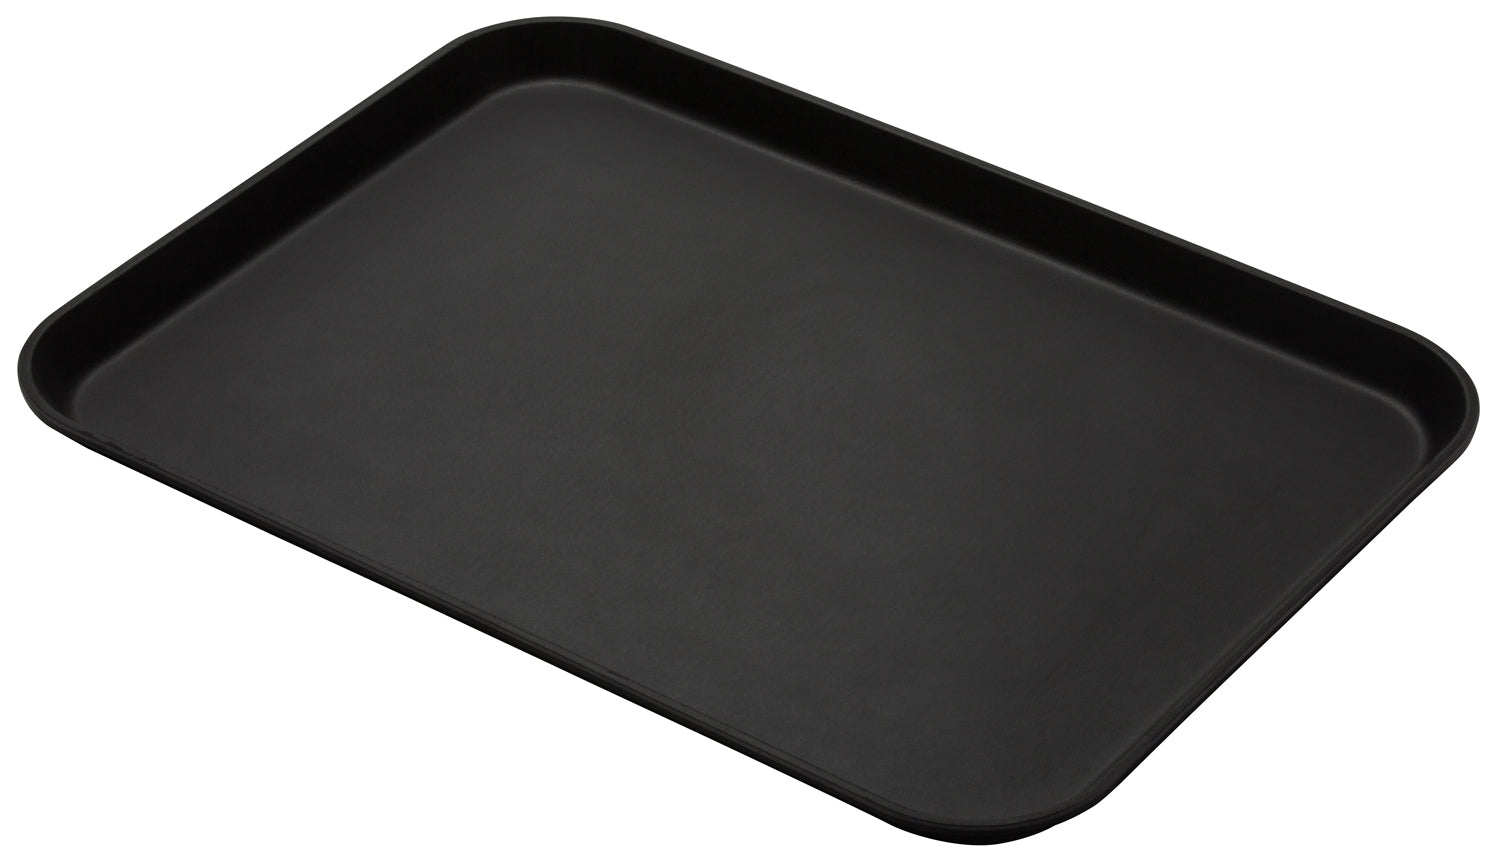 Cambro Camtread® Fiberglass Tablett mit rutschfester Gummioberfläche, rechteckig – hohes Profil 45 cm, 6 Stück im Karton - 1826CT110